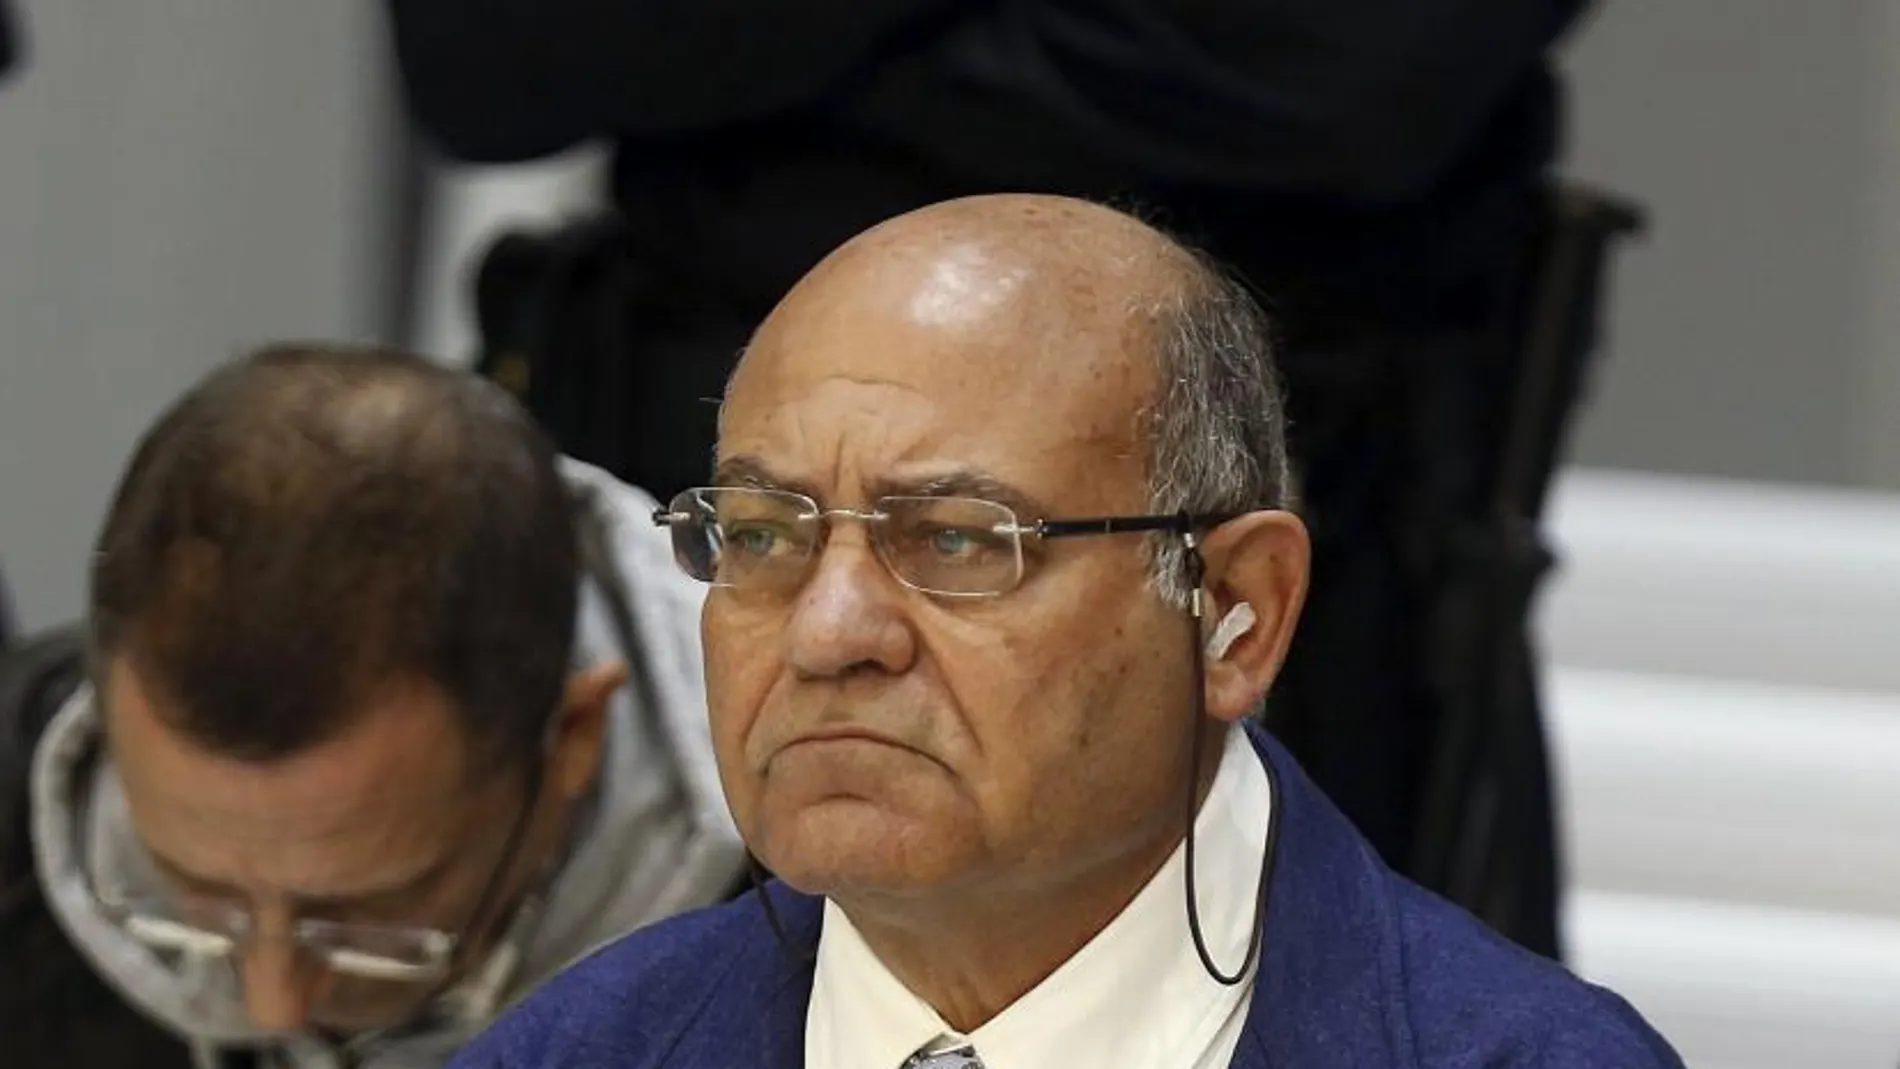 El ex presidente de Marsans Gerardo Díaz Ferrán